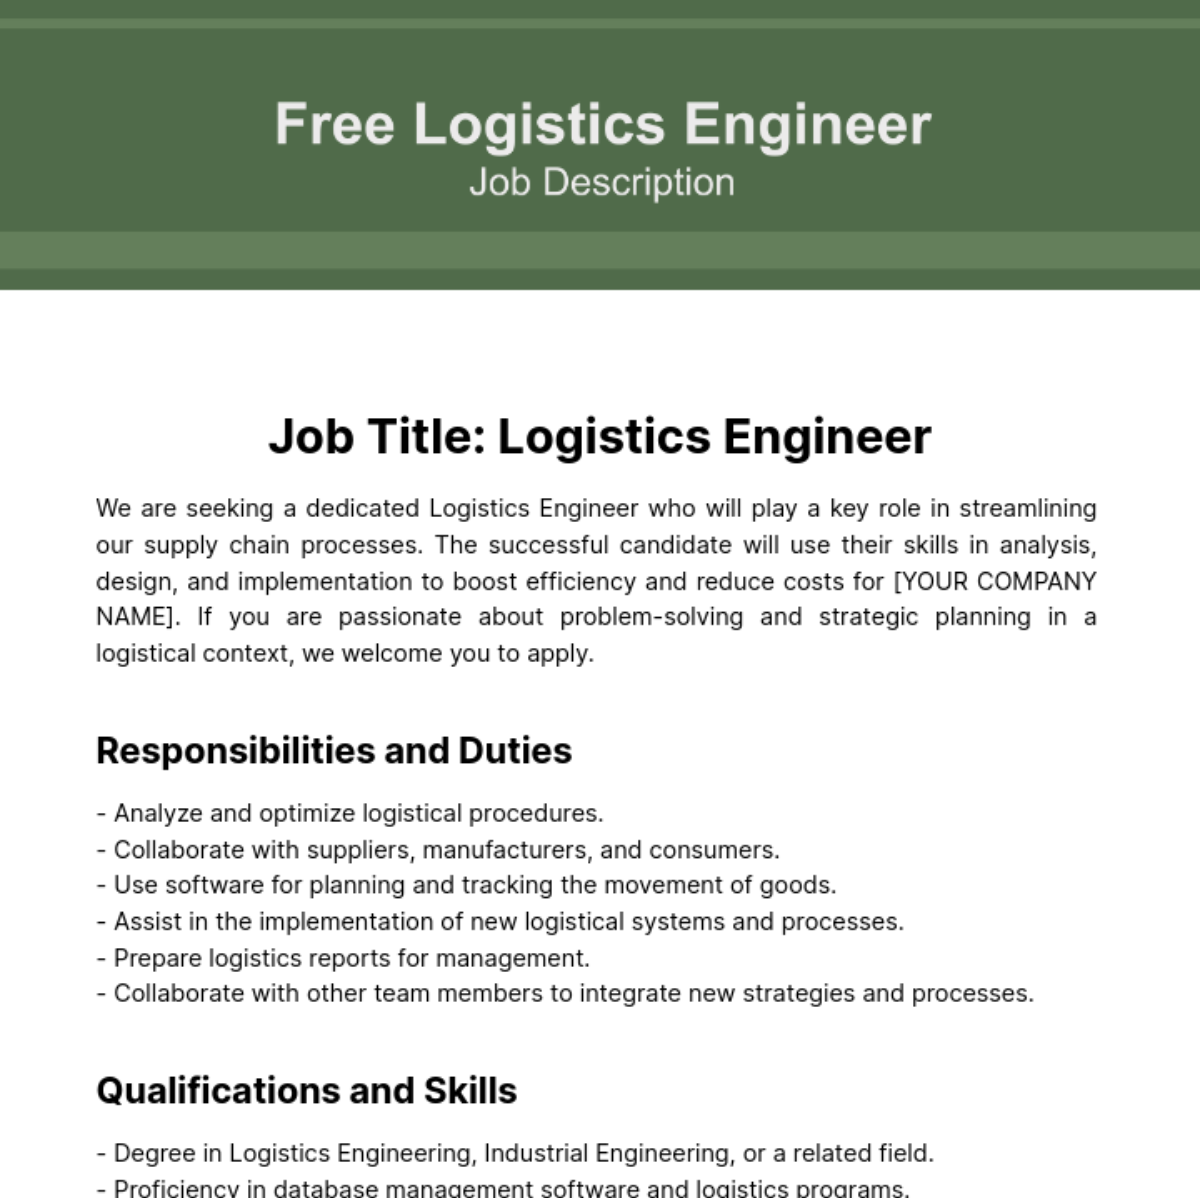 Free Logistics Engineer Job Description Template